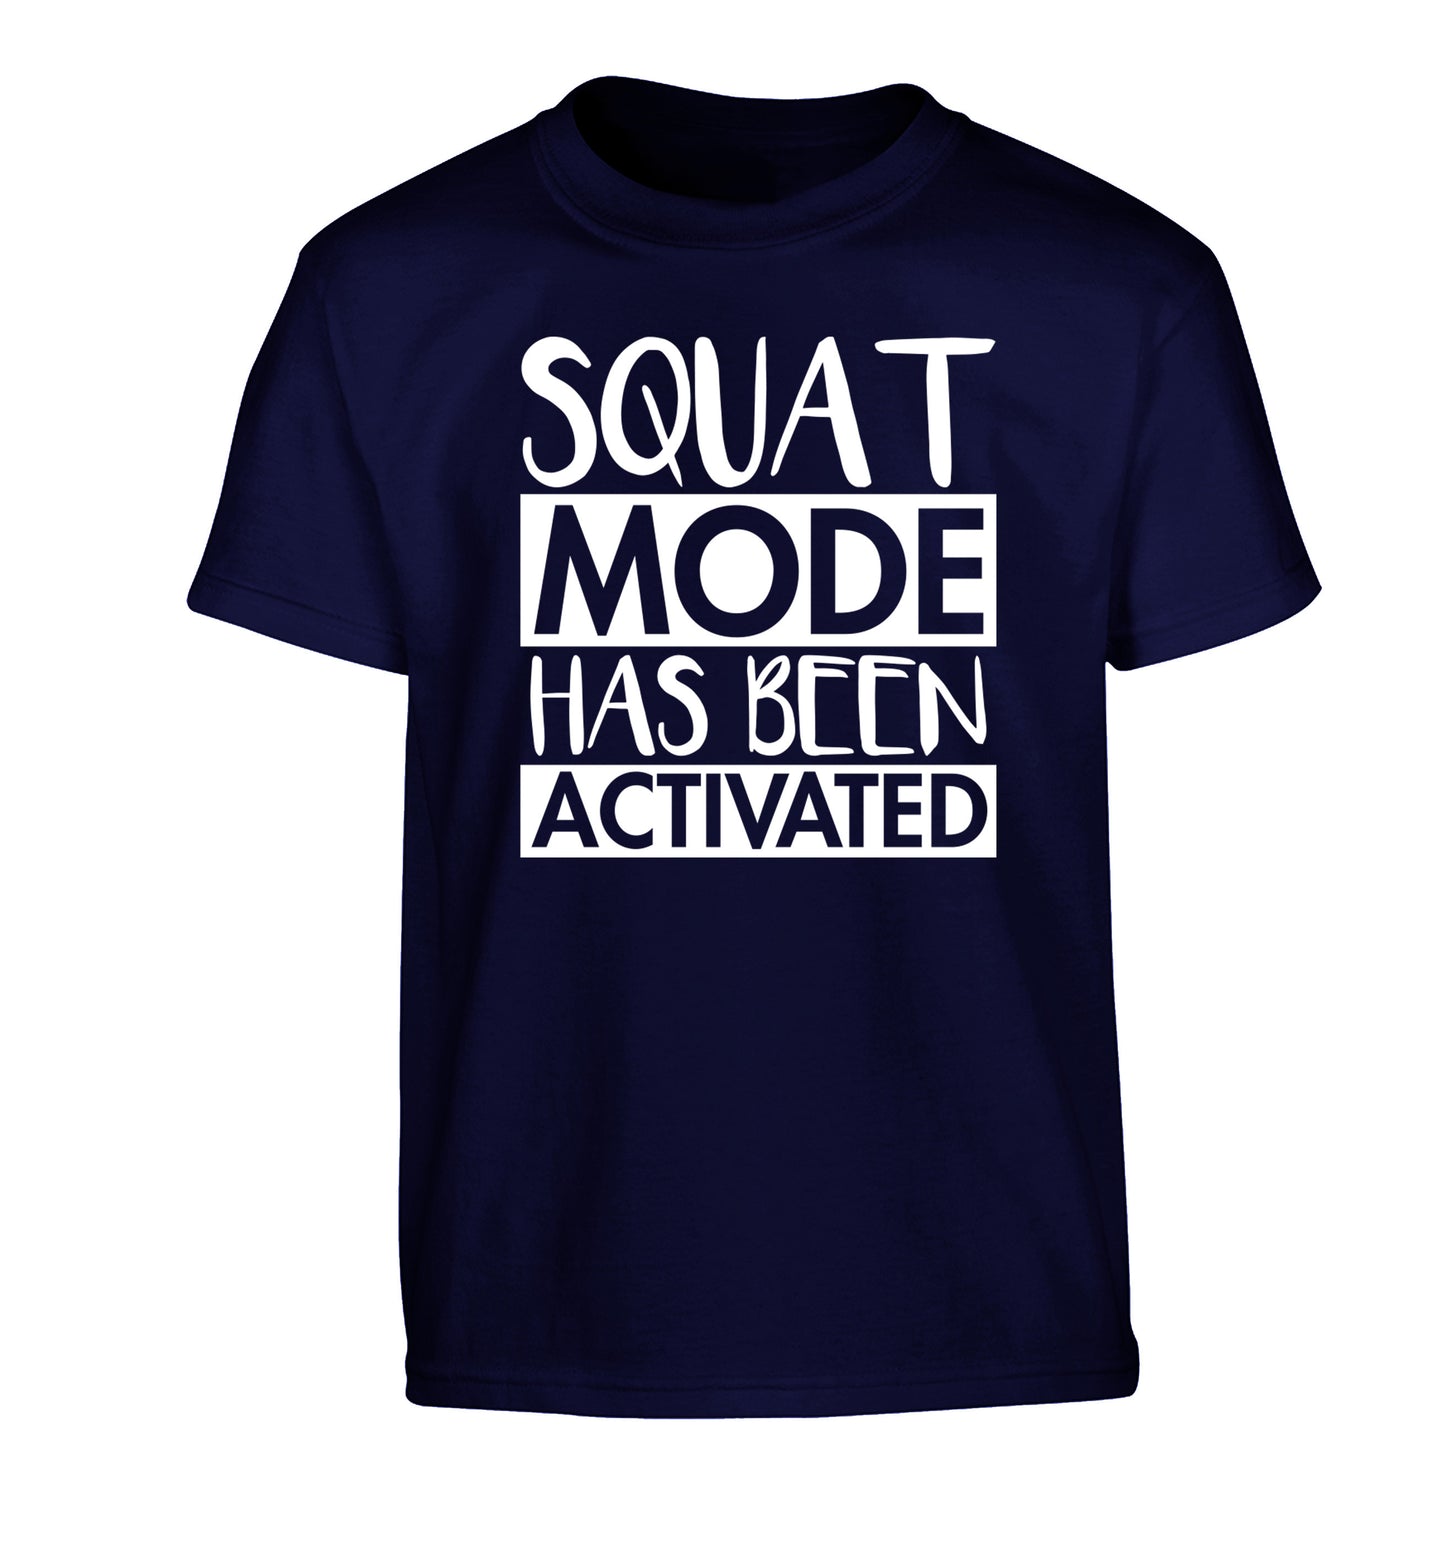 Squat mode activated Children's navy Tshirt 12-14 Years